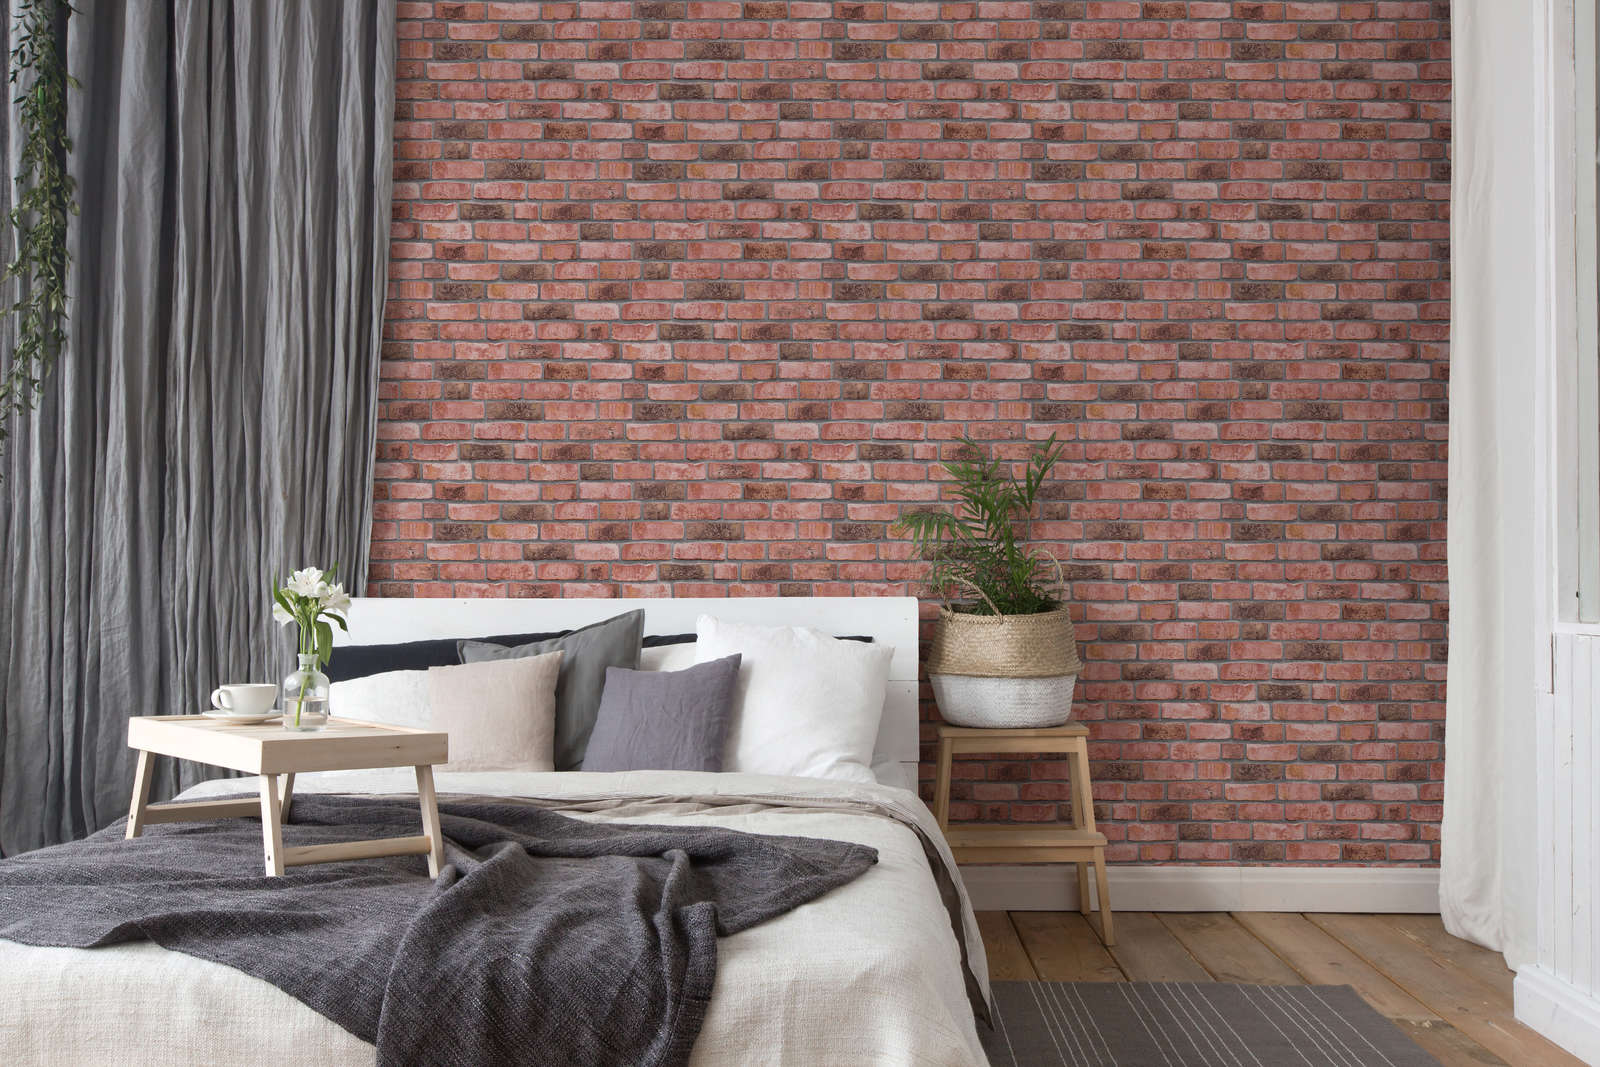             Stone optics wallpaper with wall optics - red, grey
        